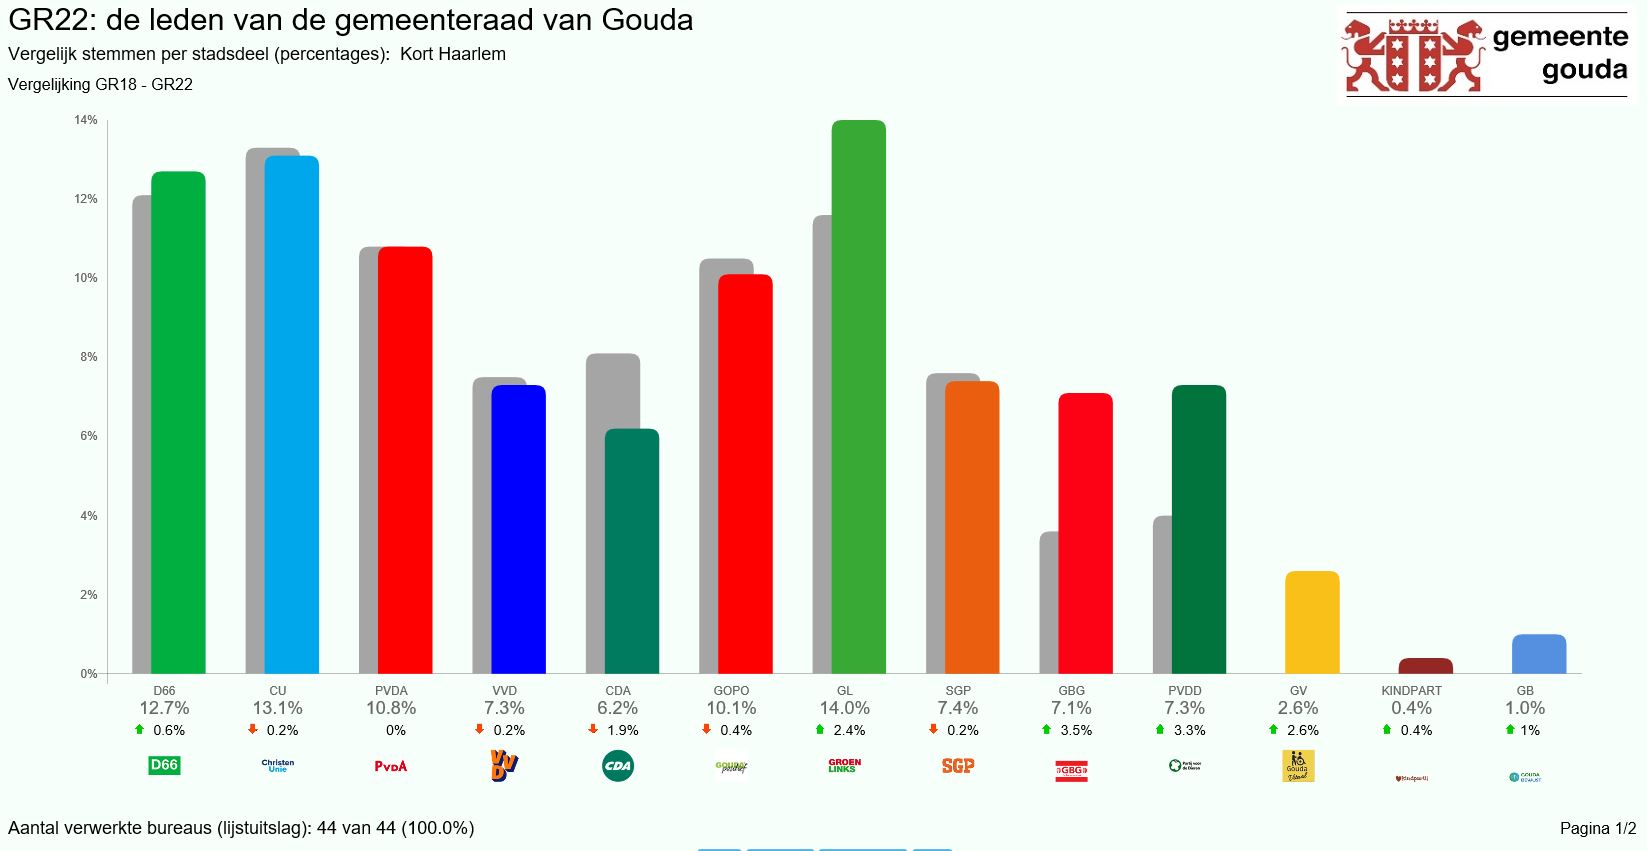 Vergelijking stemmen per partij percentages Kort Haarlem